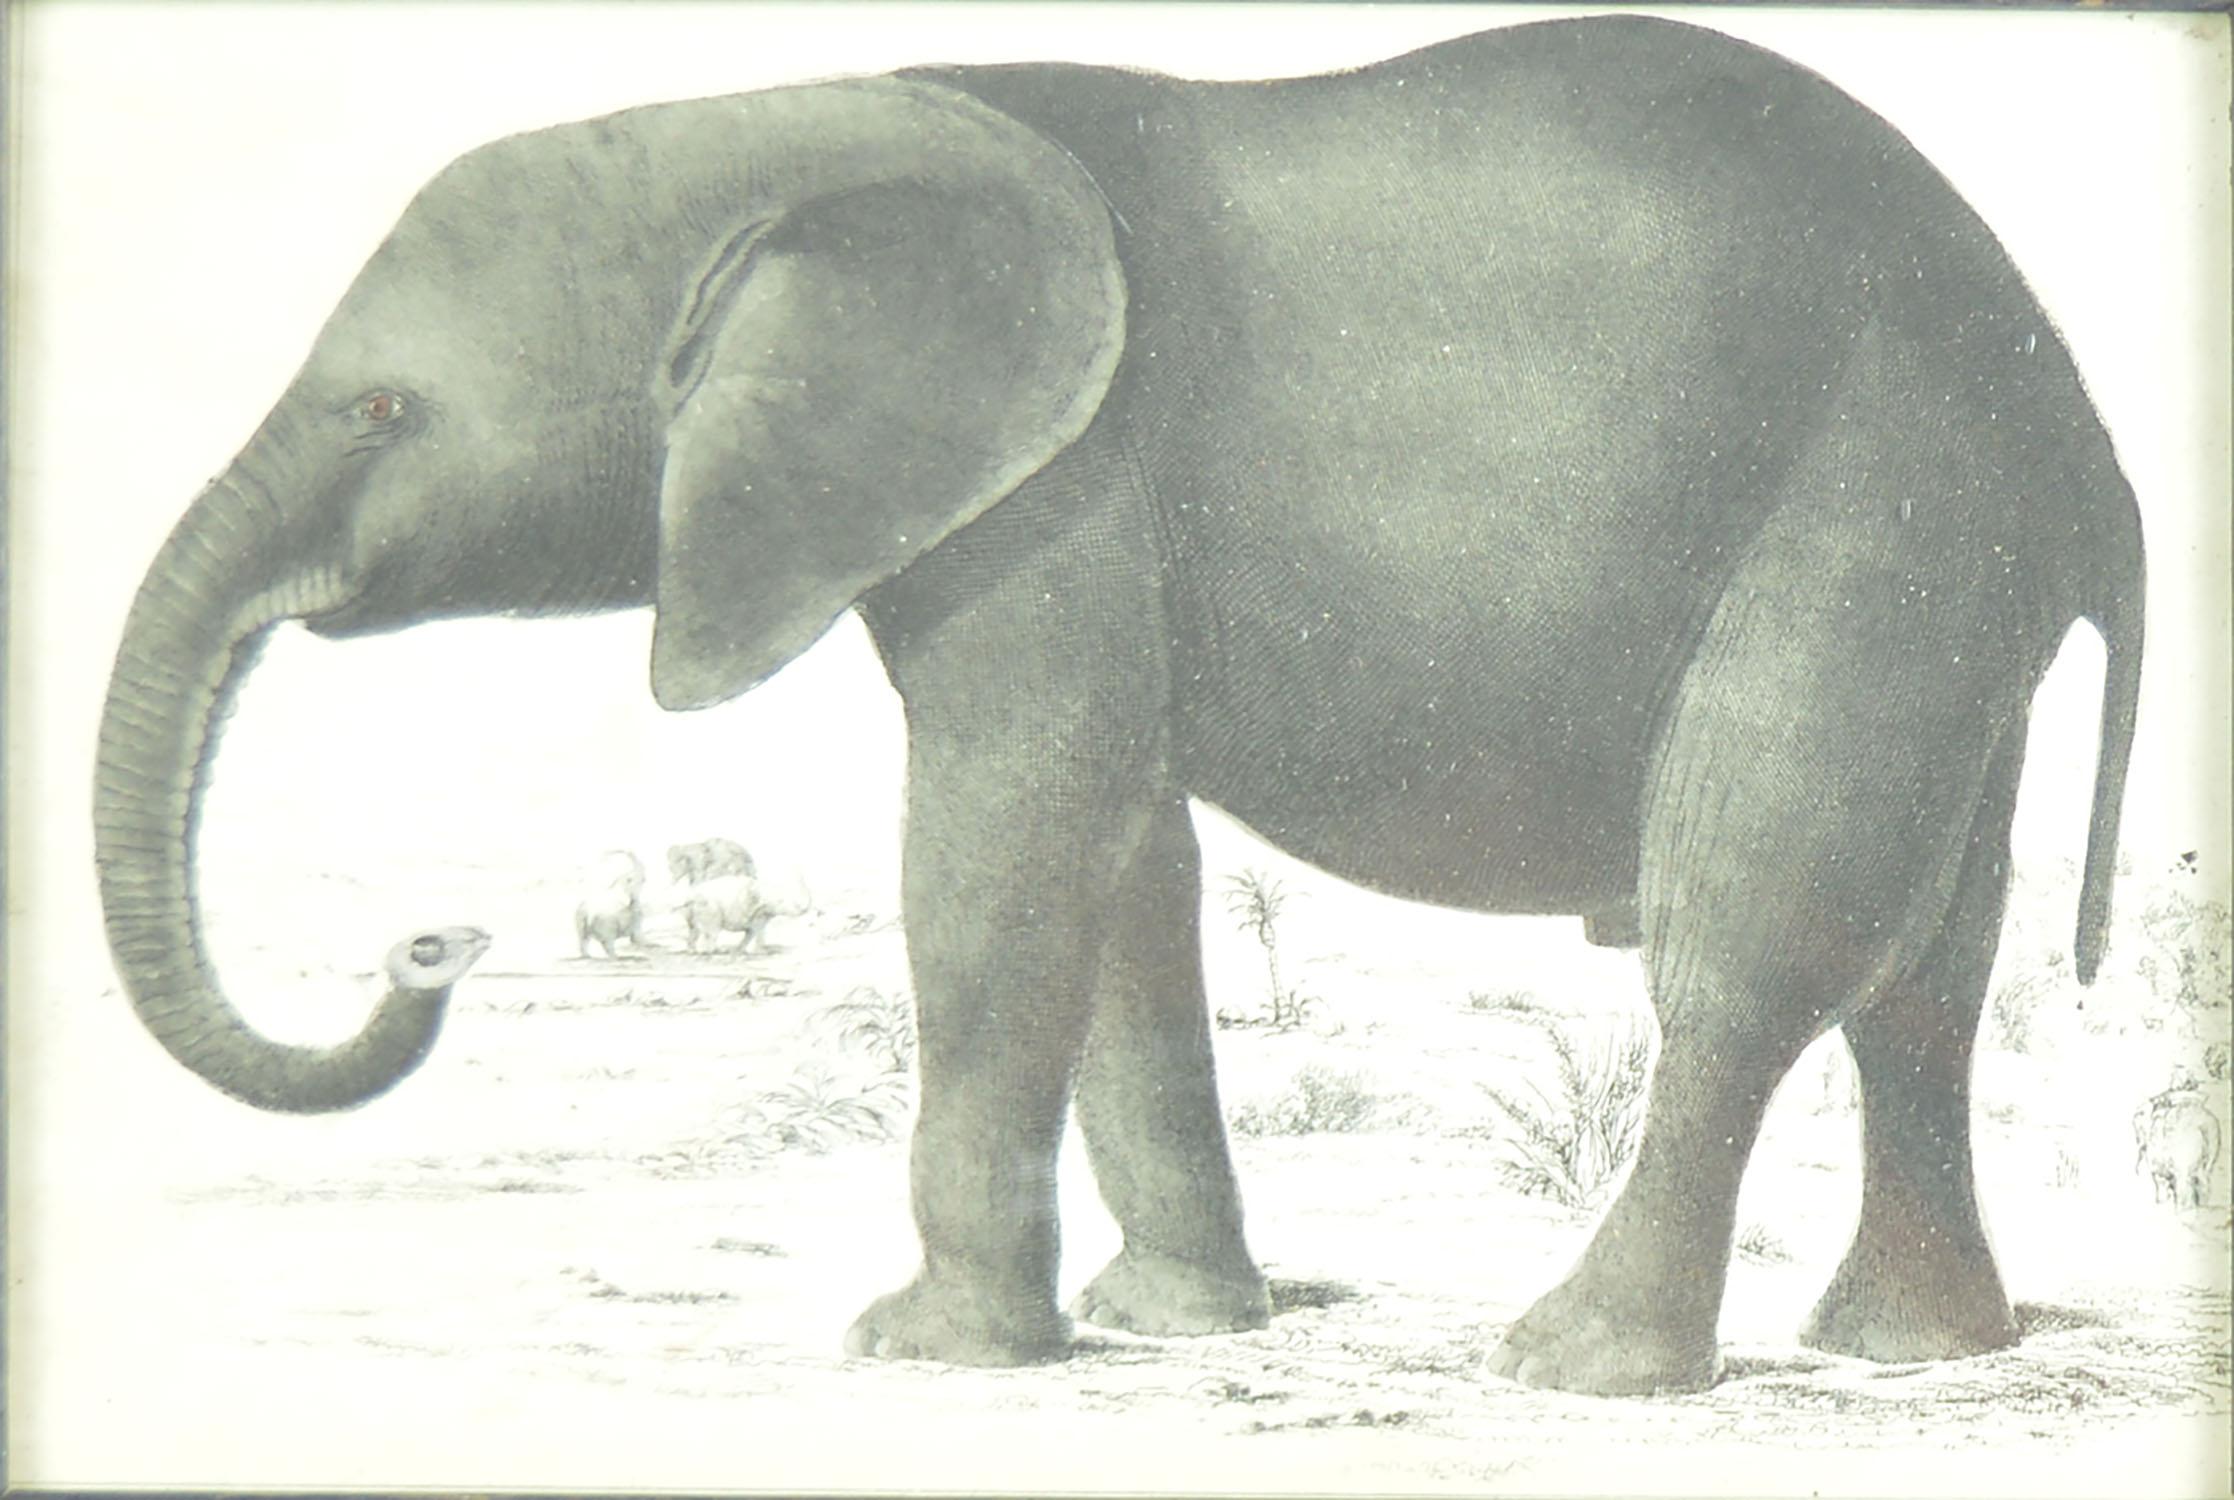 Folk Art Original Antique Print of an Elephant, 1847